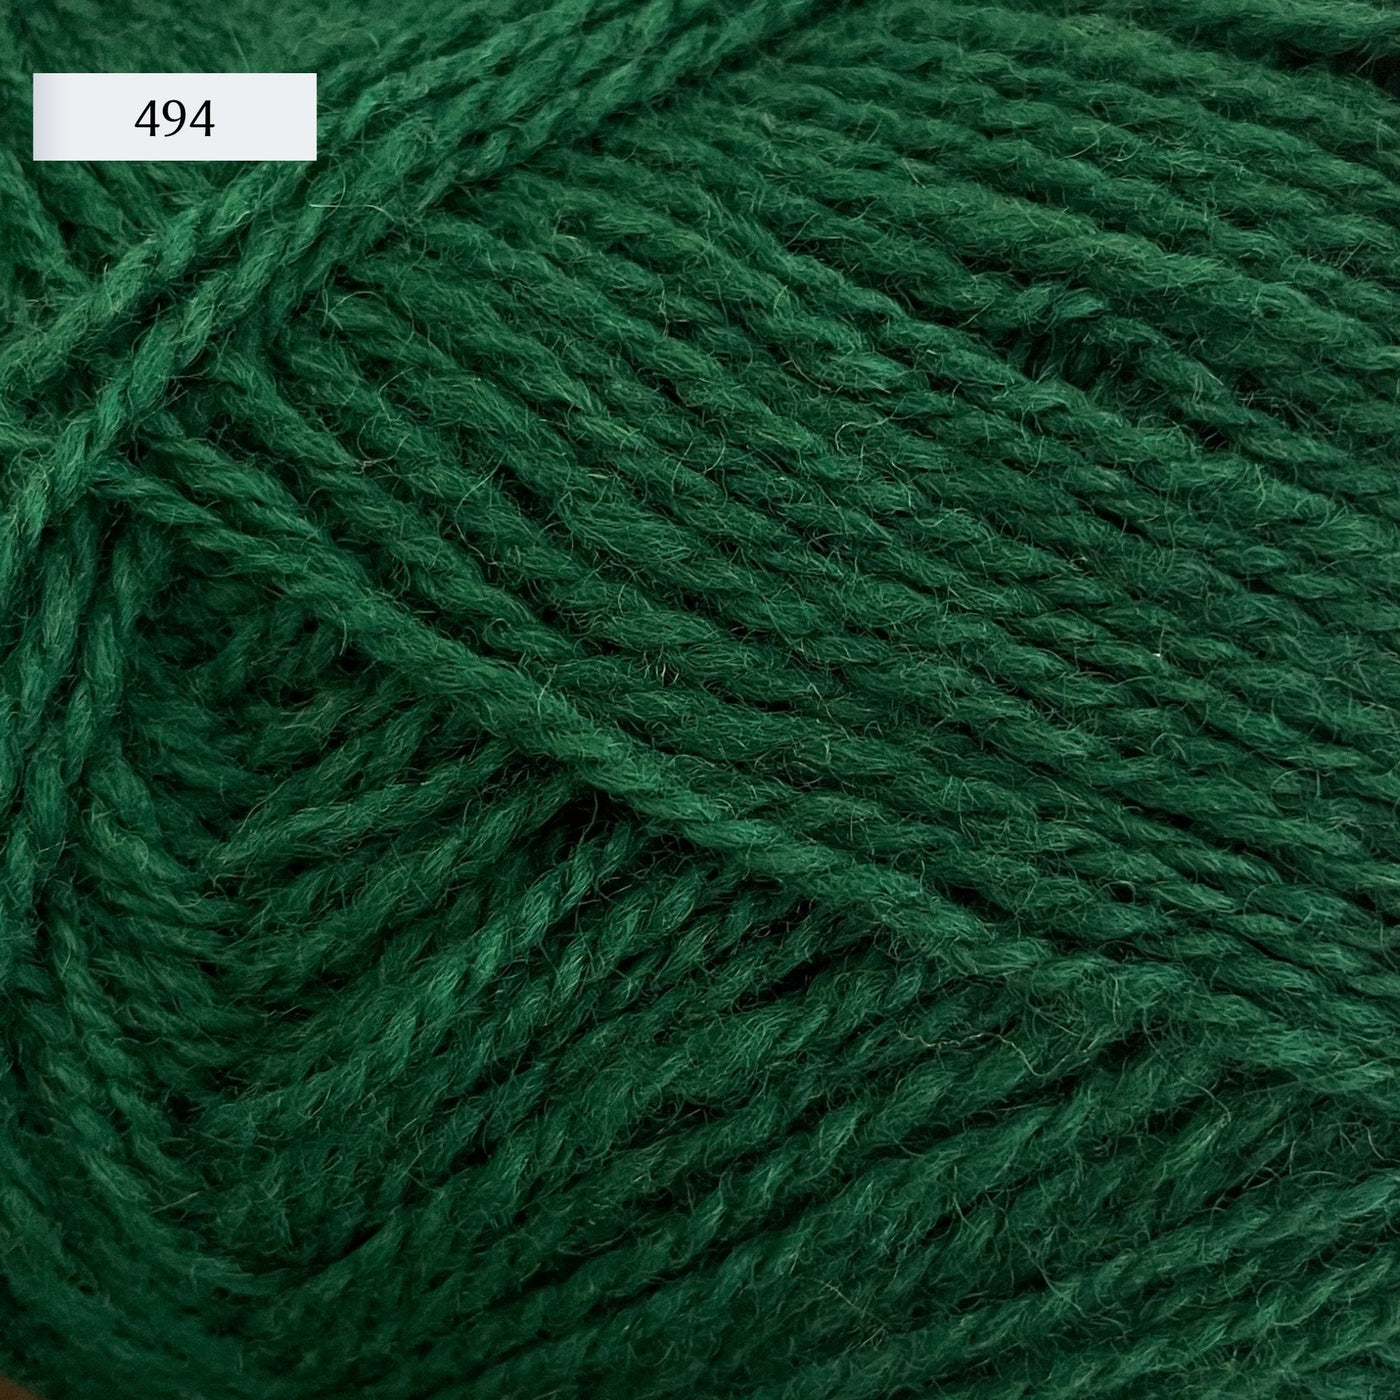 Rauma Finullgarn, a fingering/sport weight yarn, in color 494, a blue-leaning forest green